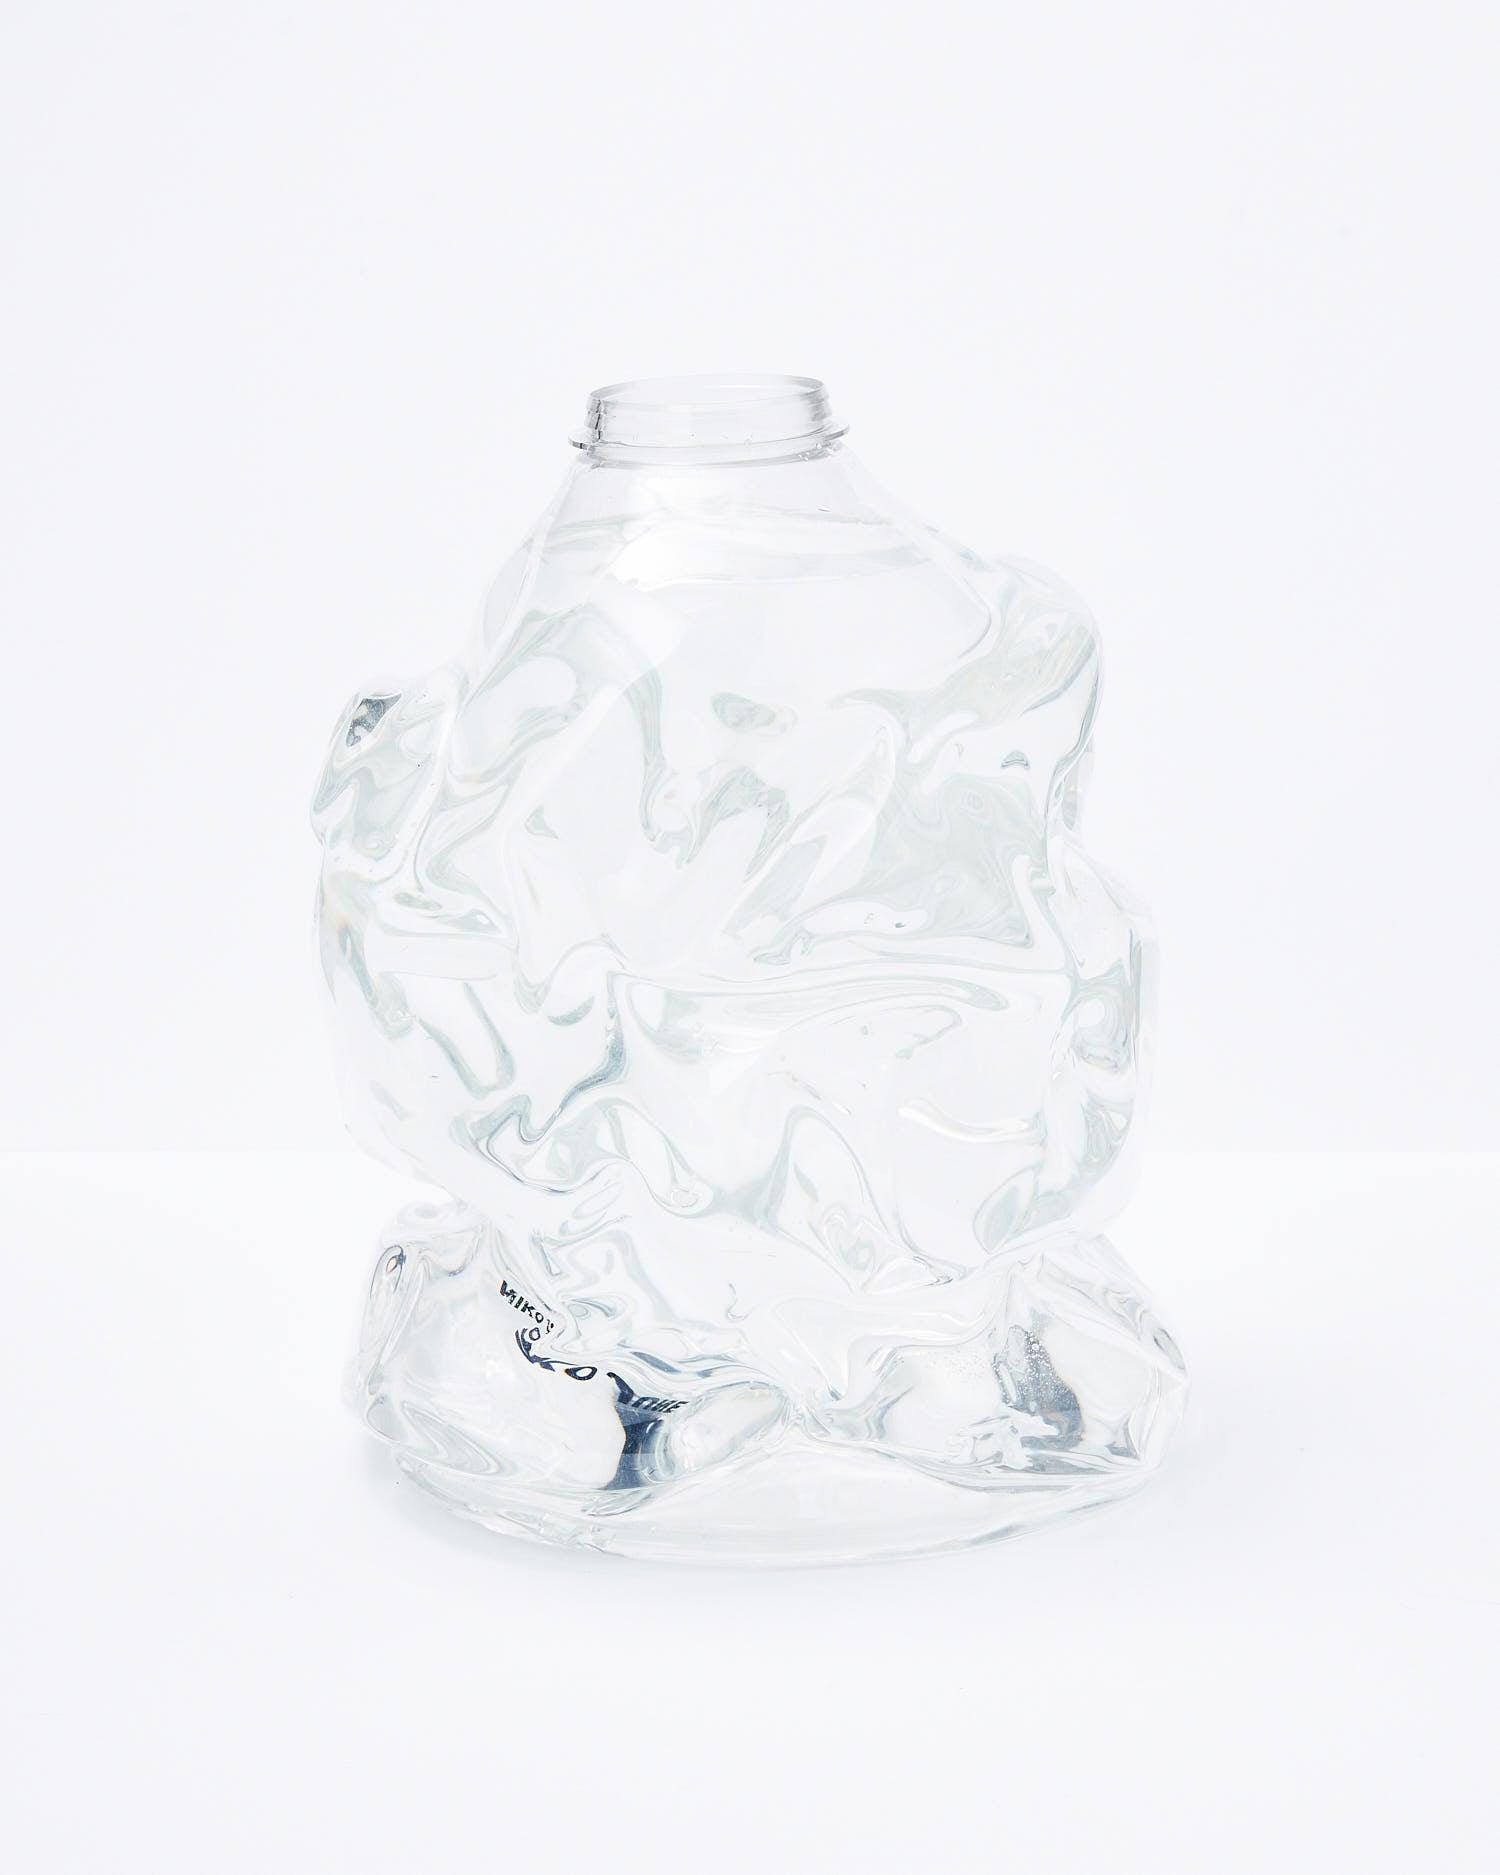 White background, transparent handmade recycled plastic vase large